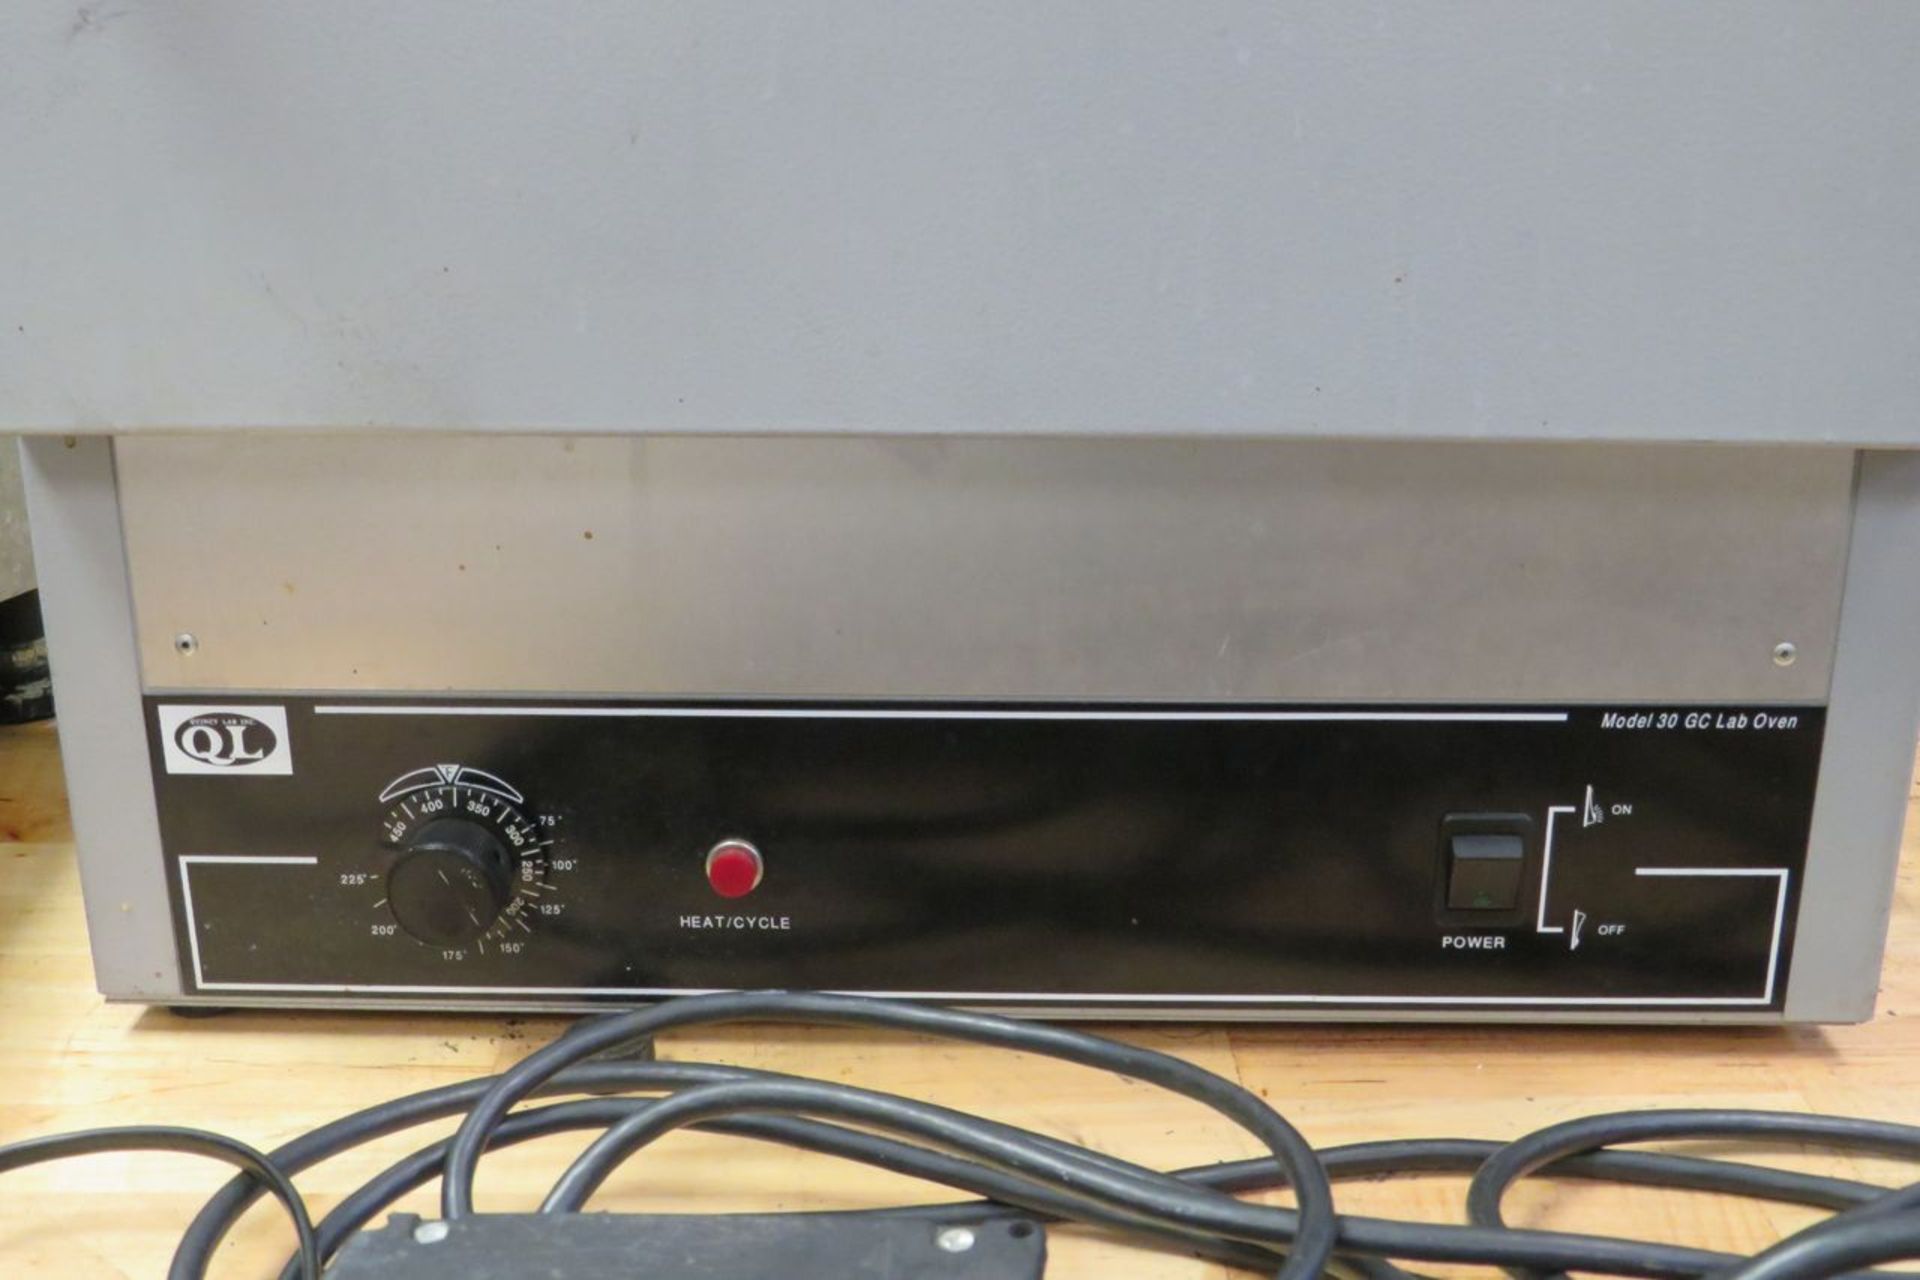 QL 30GC Lab Oven, 75- 450 Degrees (Metrology Lab) - Image 2 of 2